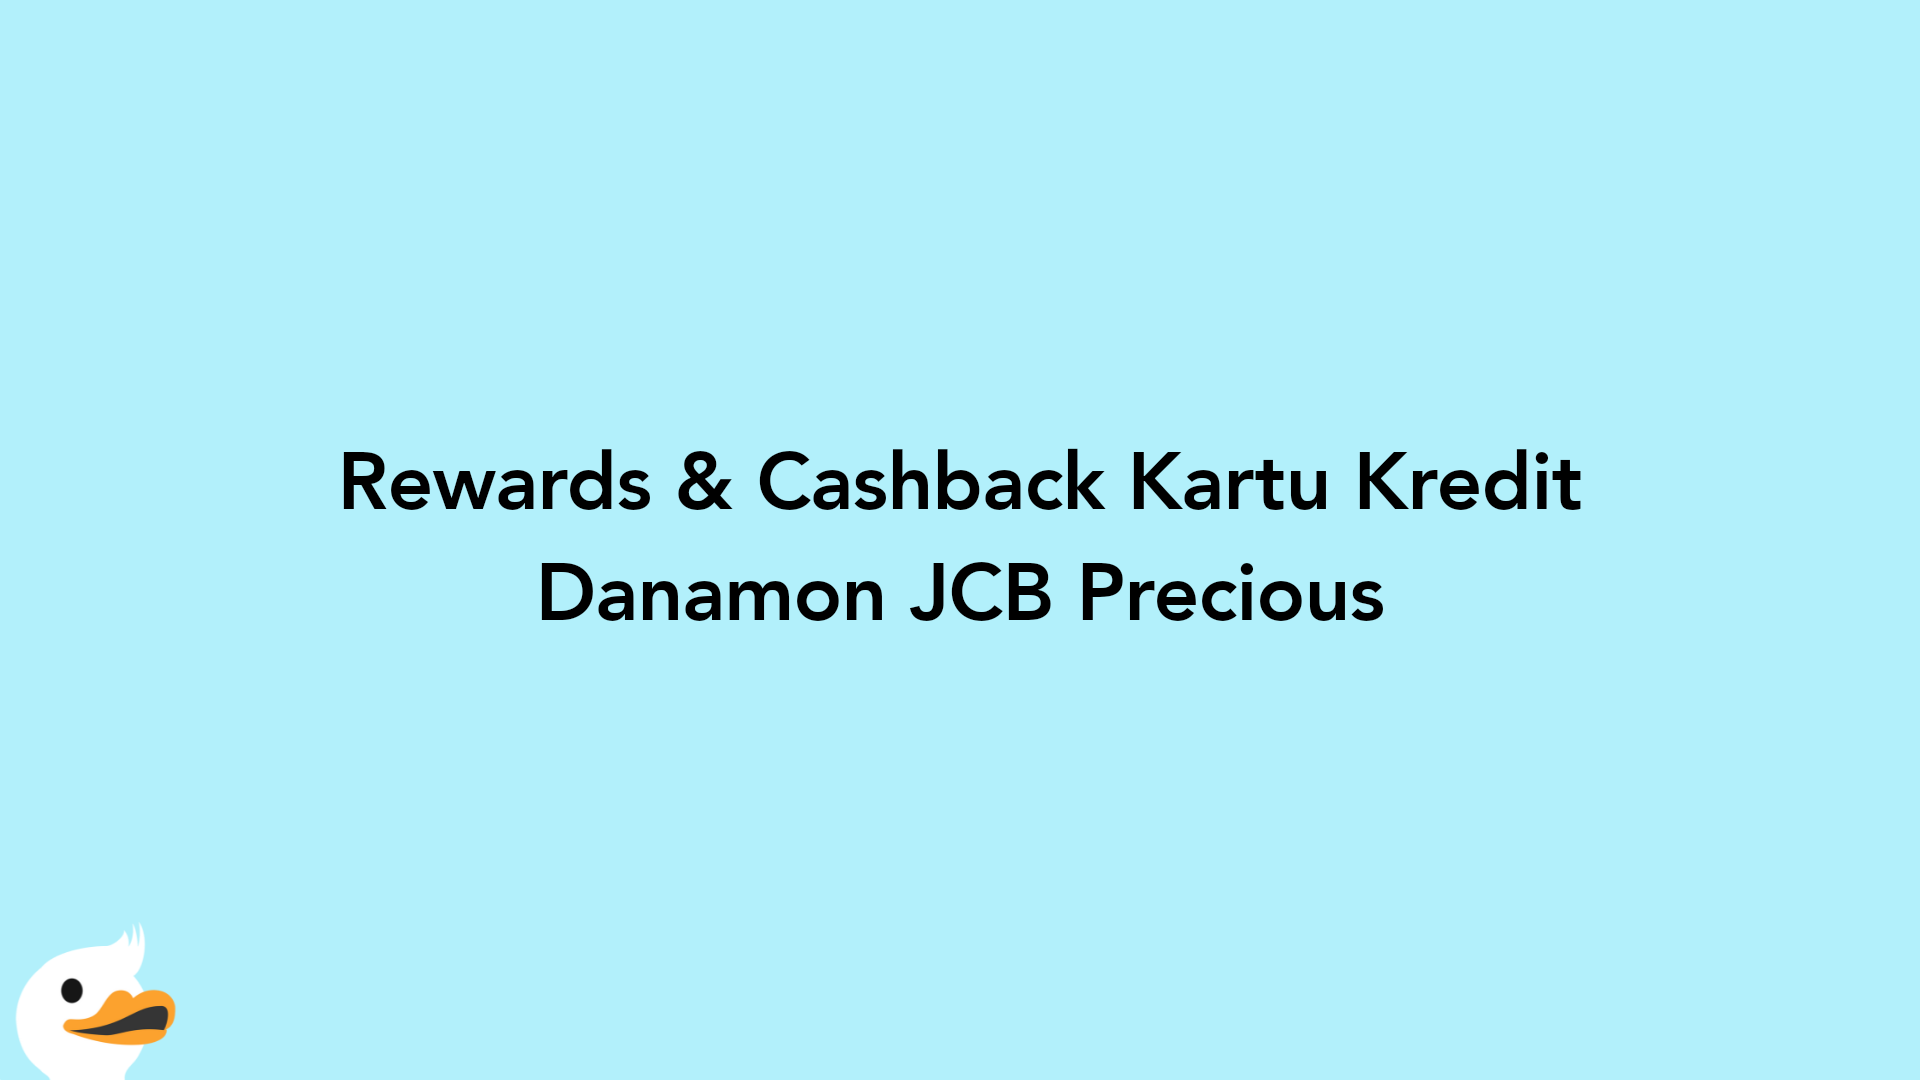 Rewards & Cashback Kartu Kredit Danamon JCB Precious